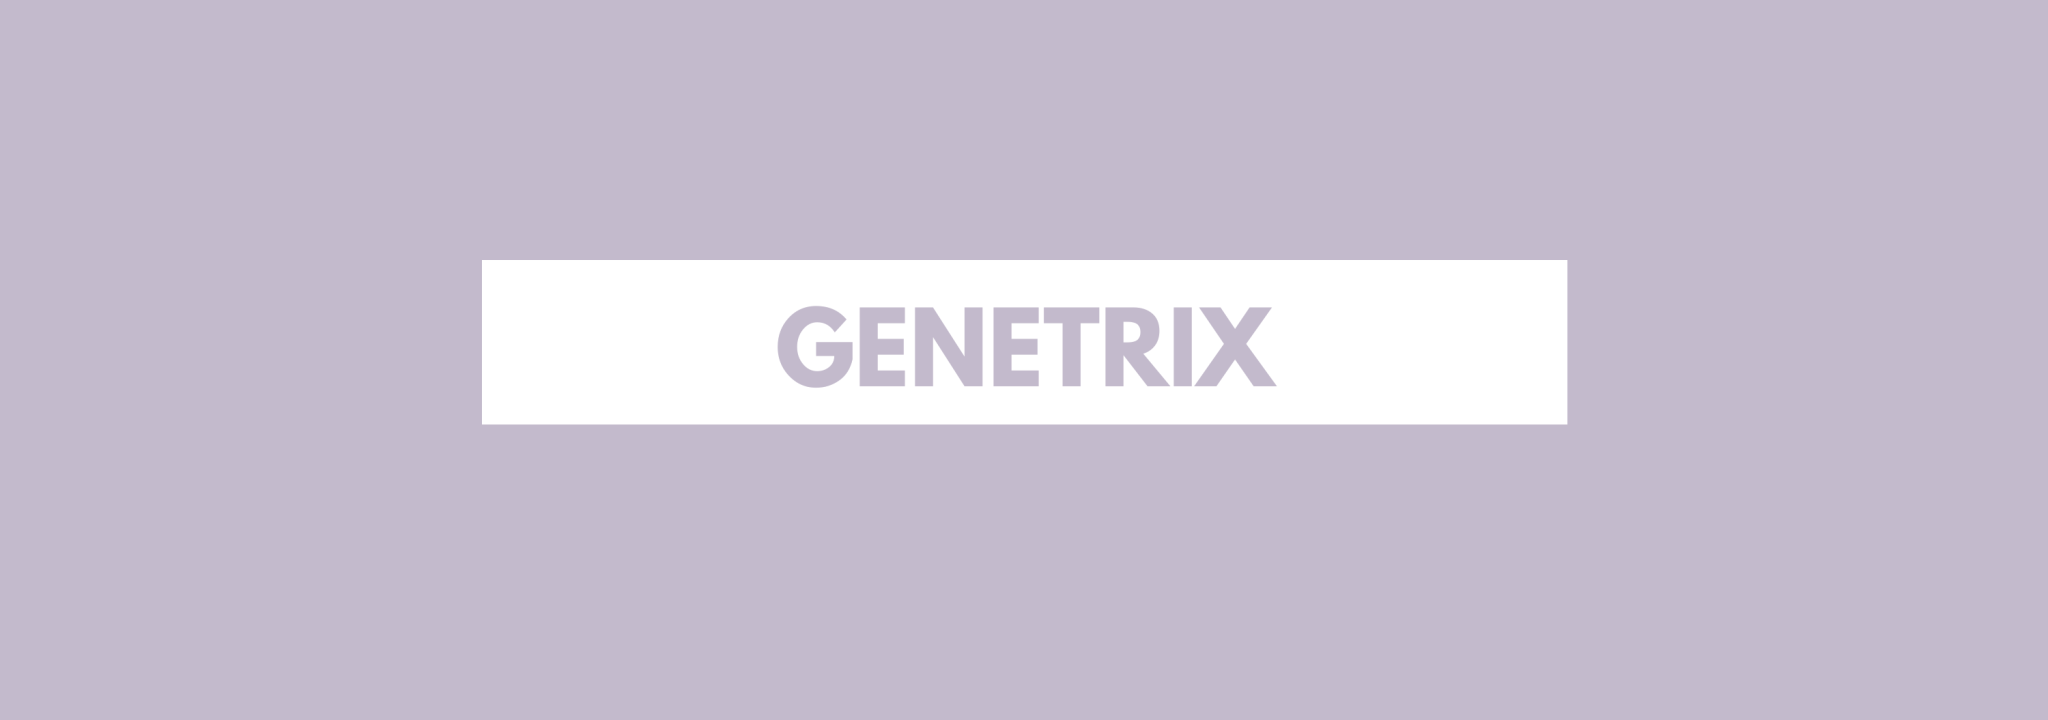 Genetrix Banner